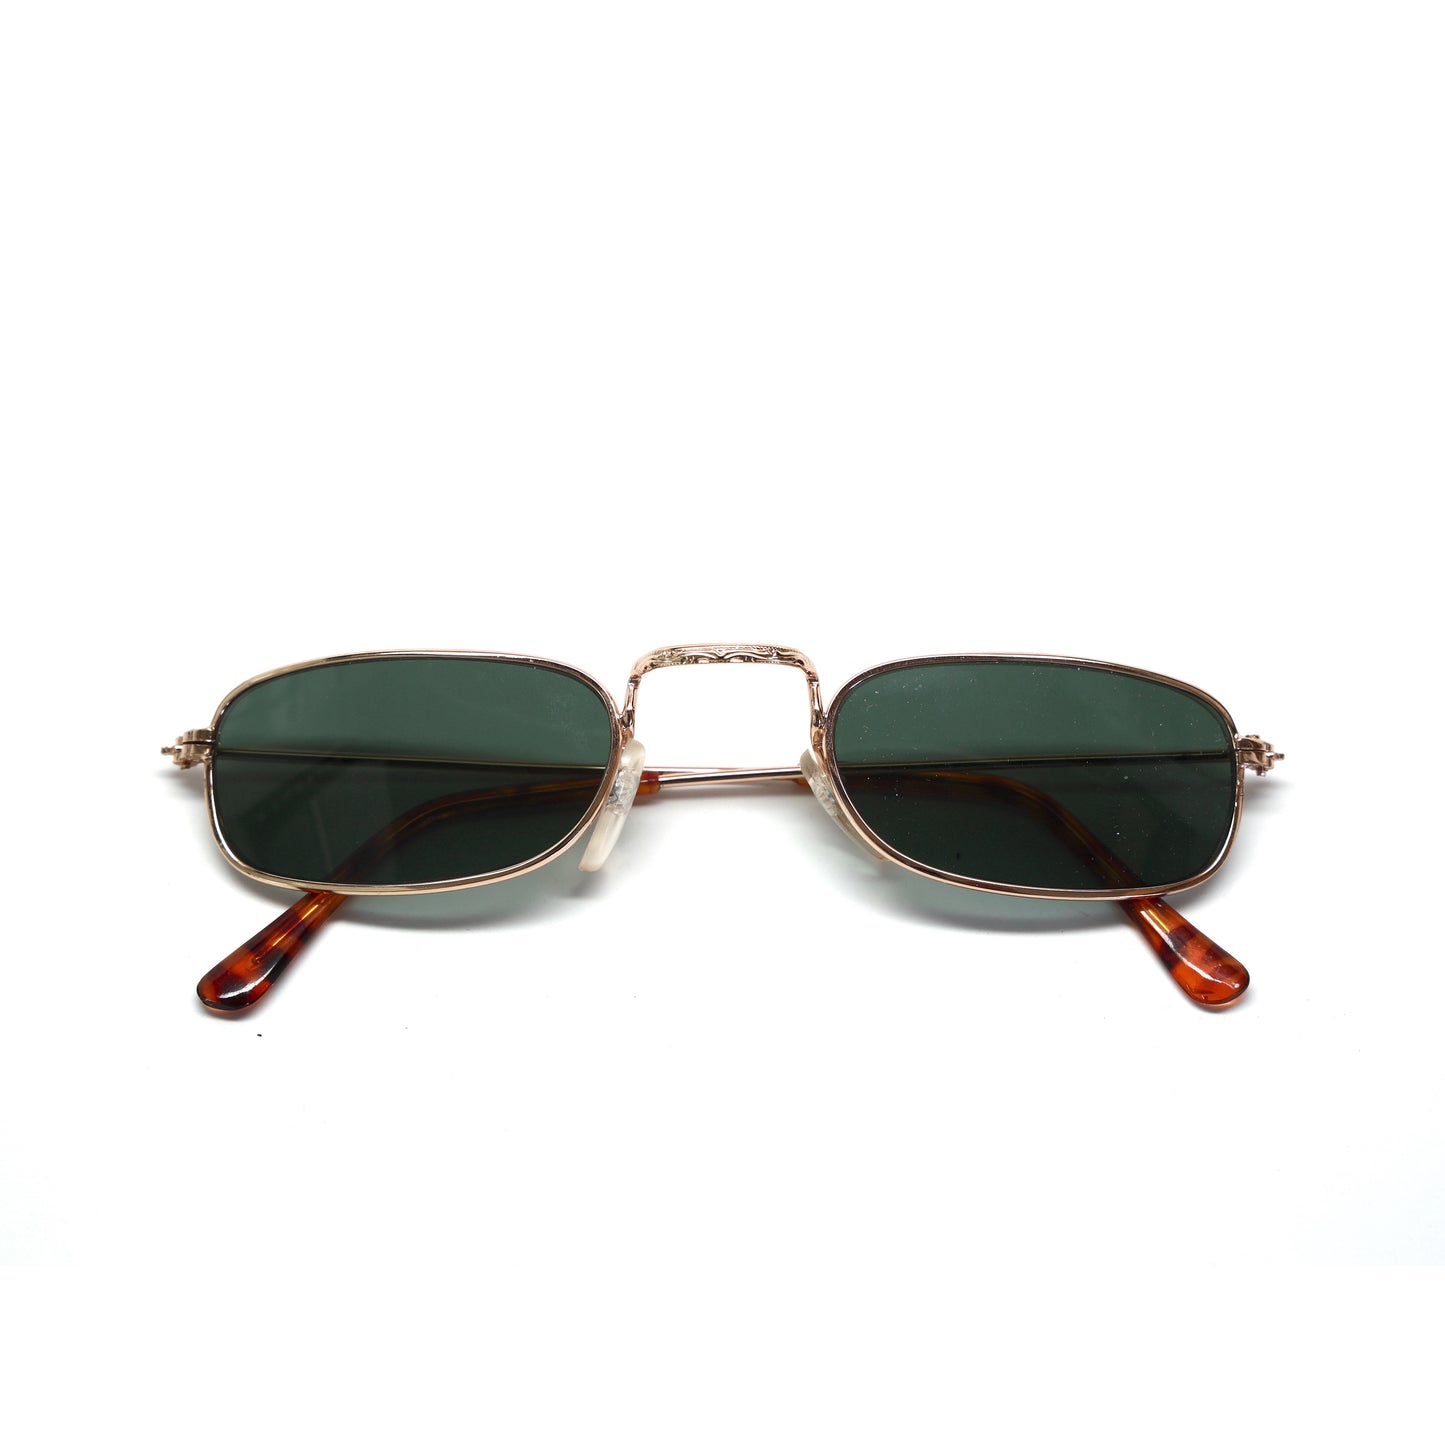 Vintage Small Size 1997 Rectangular Narrow Frame Sunglasses - Gold